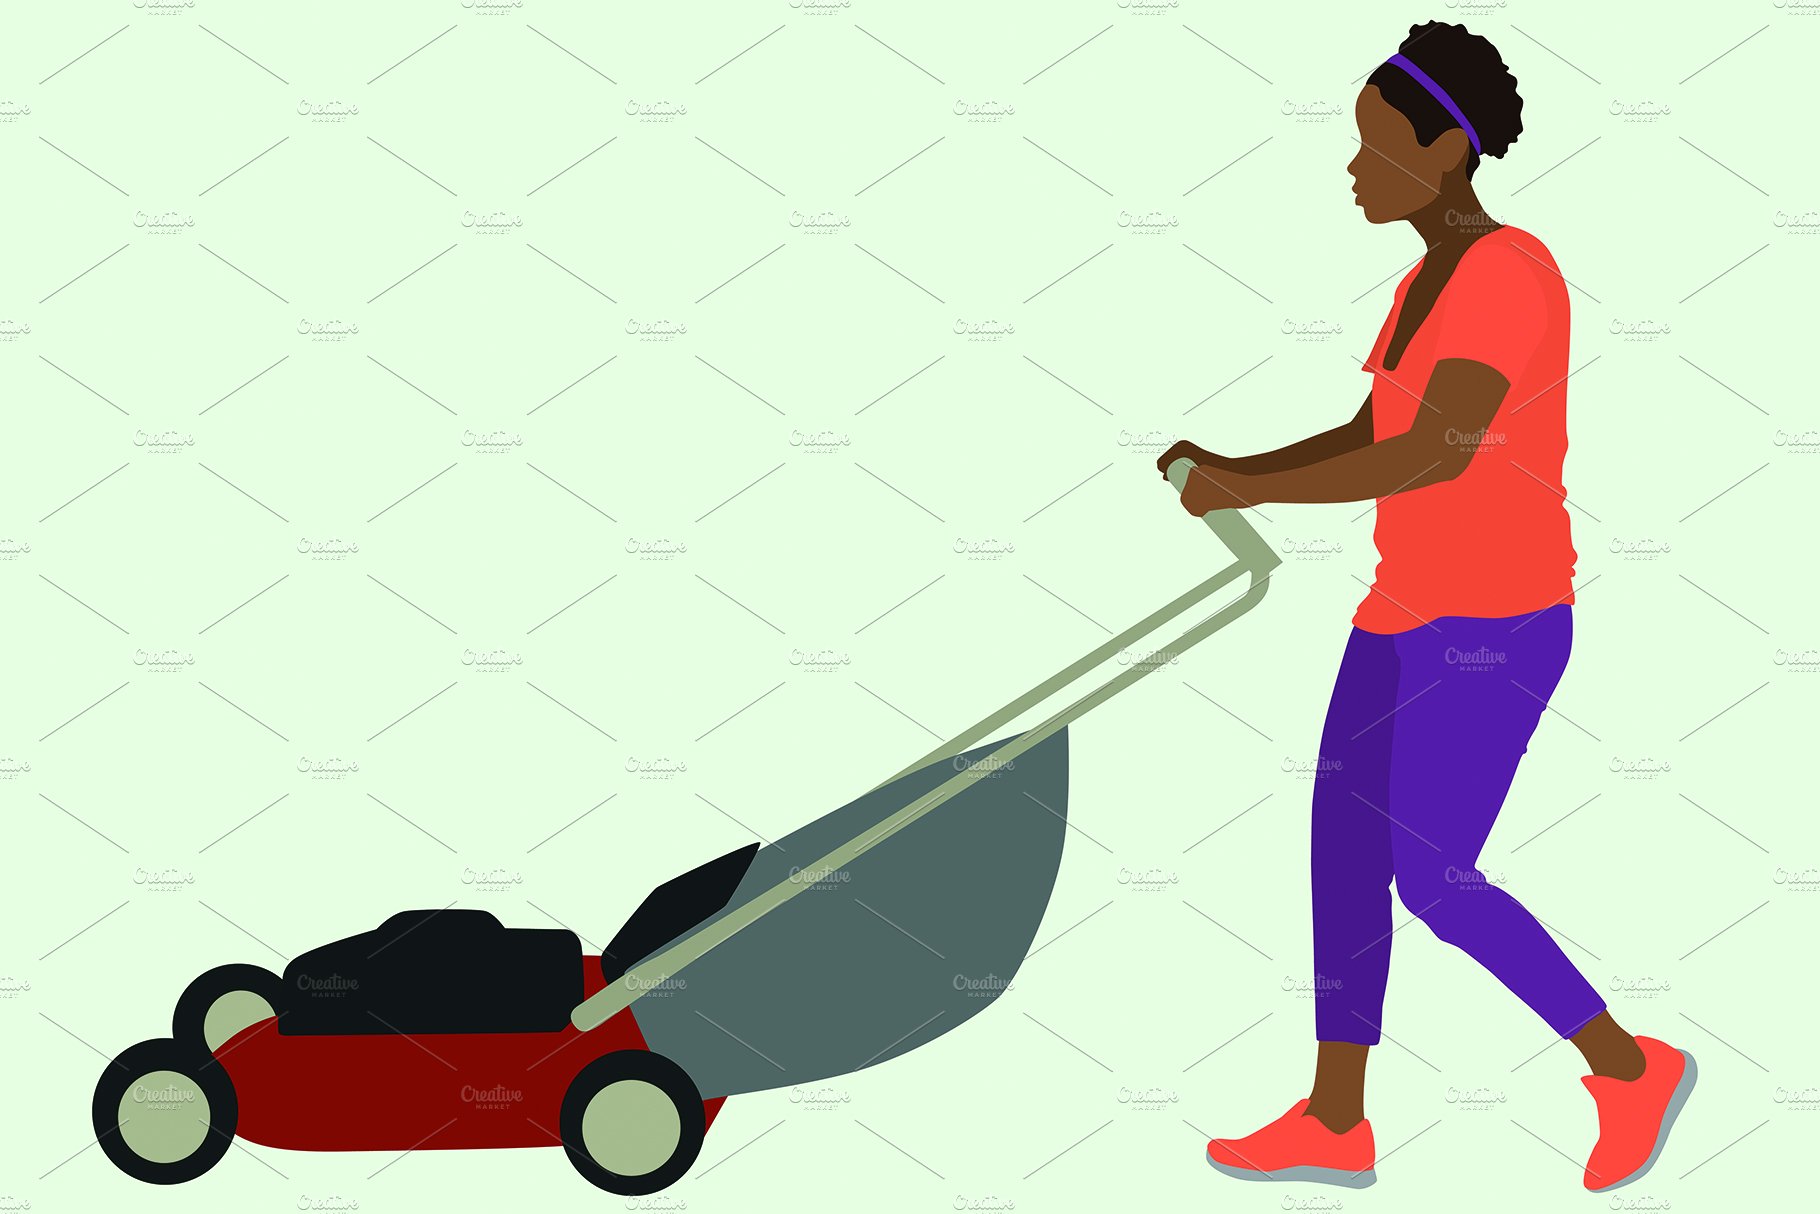 Black Woman Pushing Lawnmower cover image.